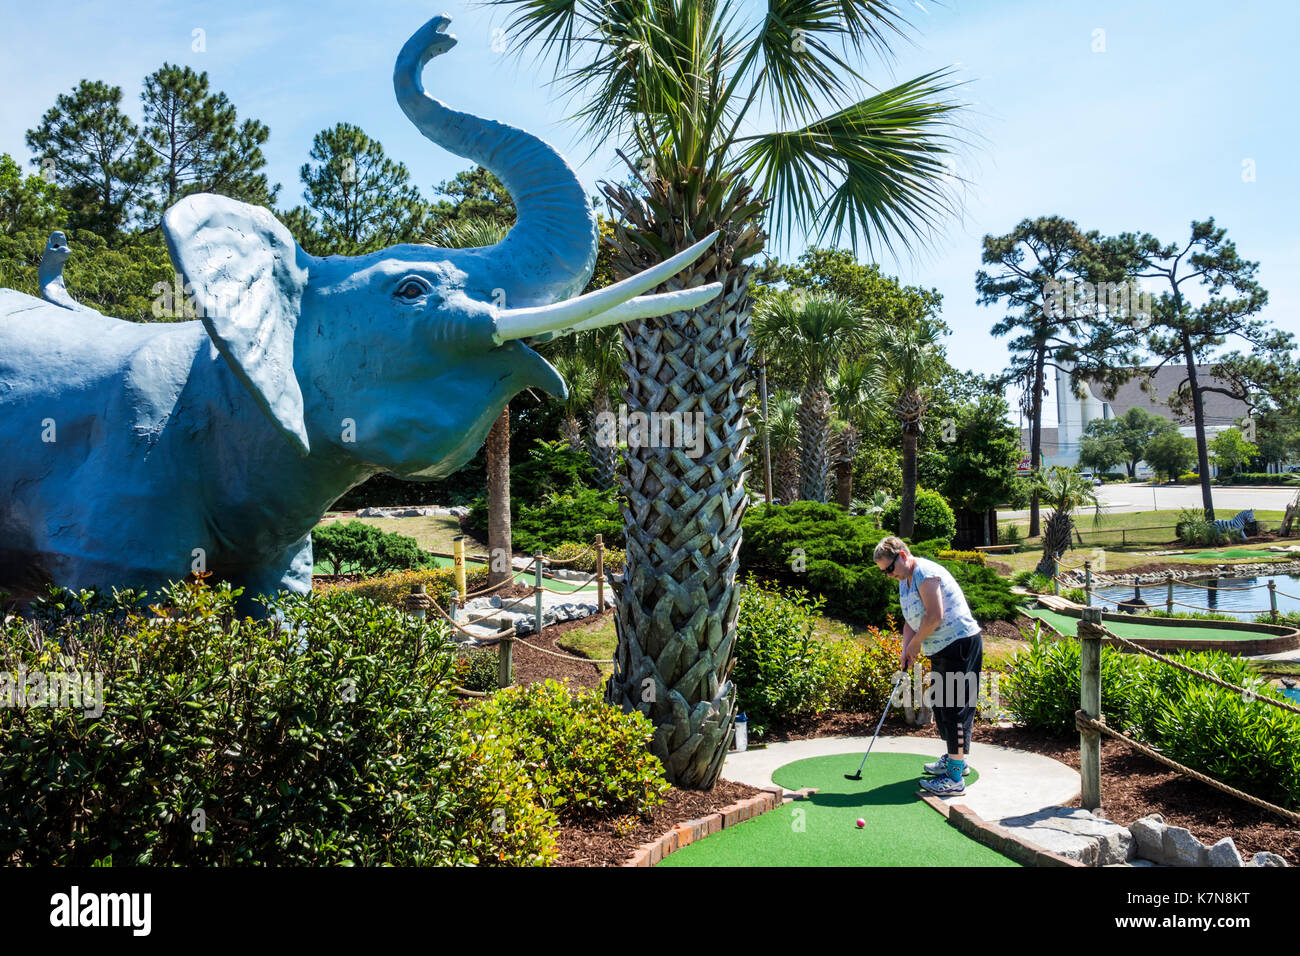 Myrtle Beach South Carolina, Jungle Safari Golf, Minigolfplatz, Elefant, Fiberglas-Statue, Miniatur, SC170516081 Stockfoto